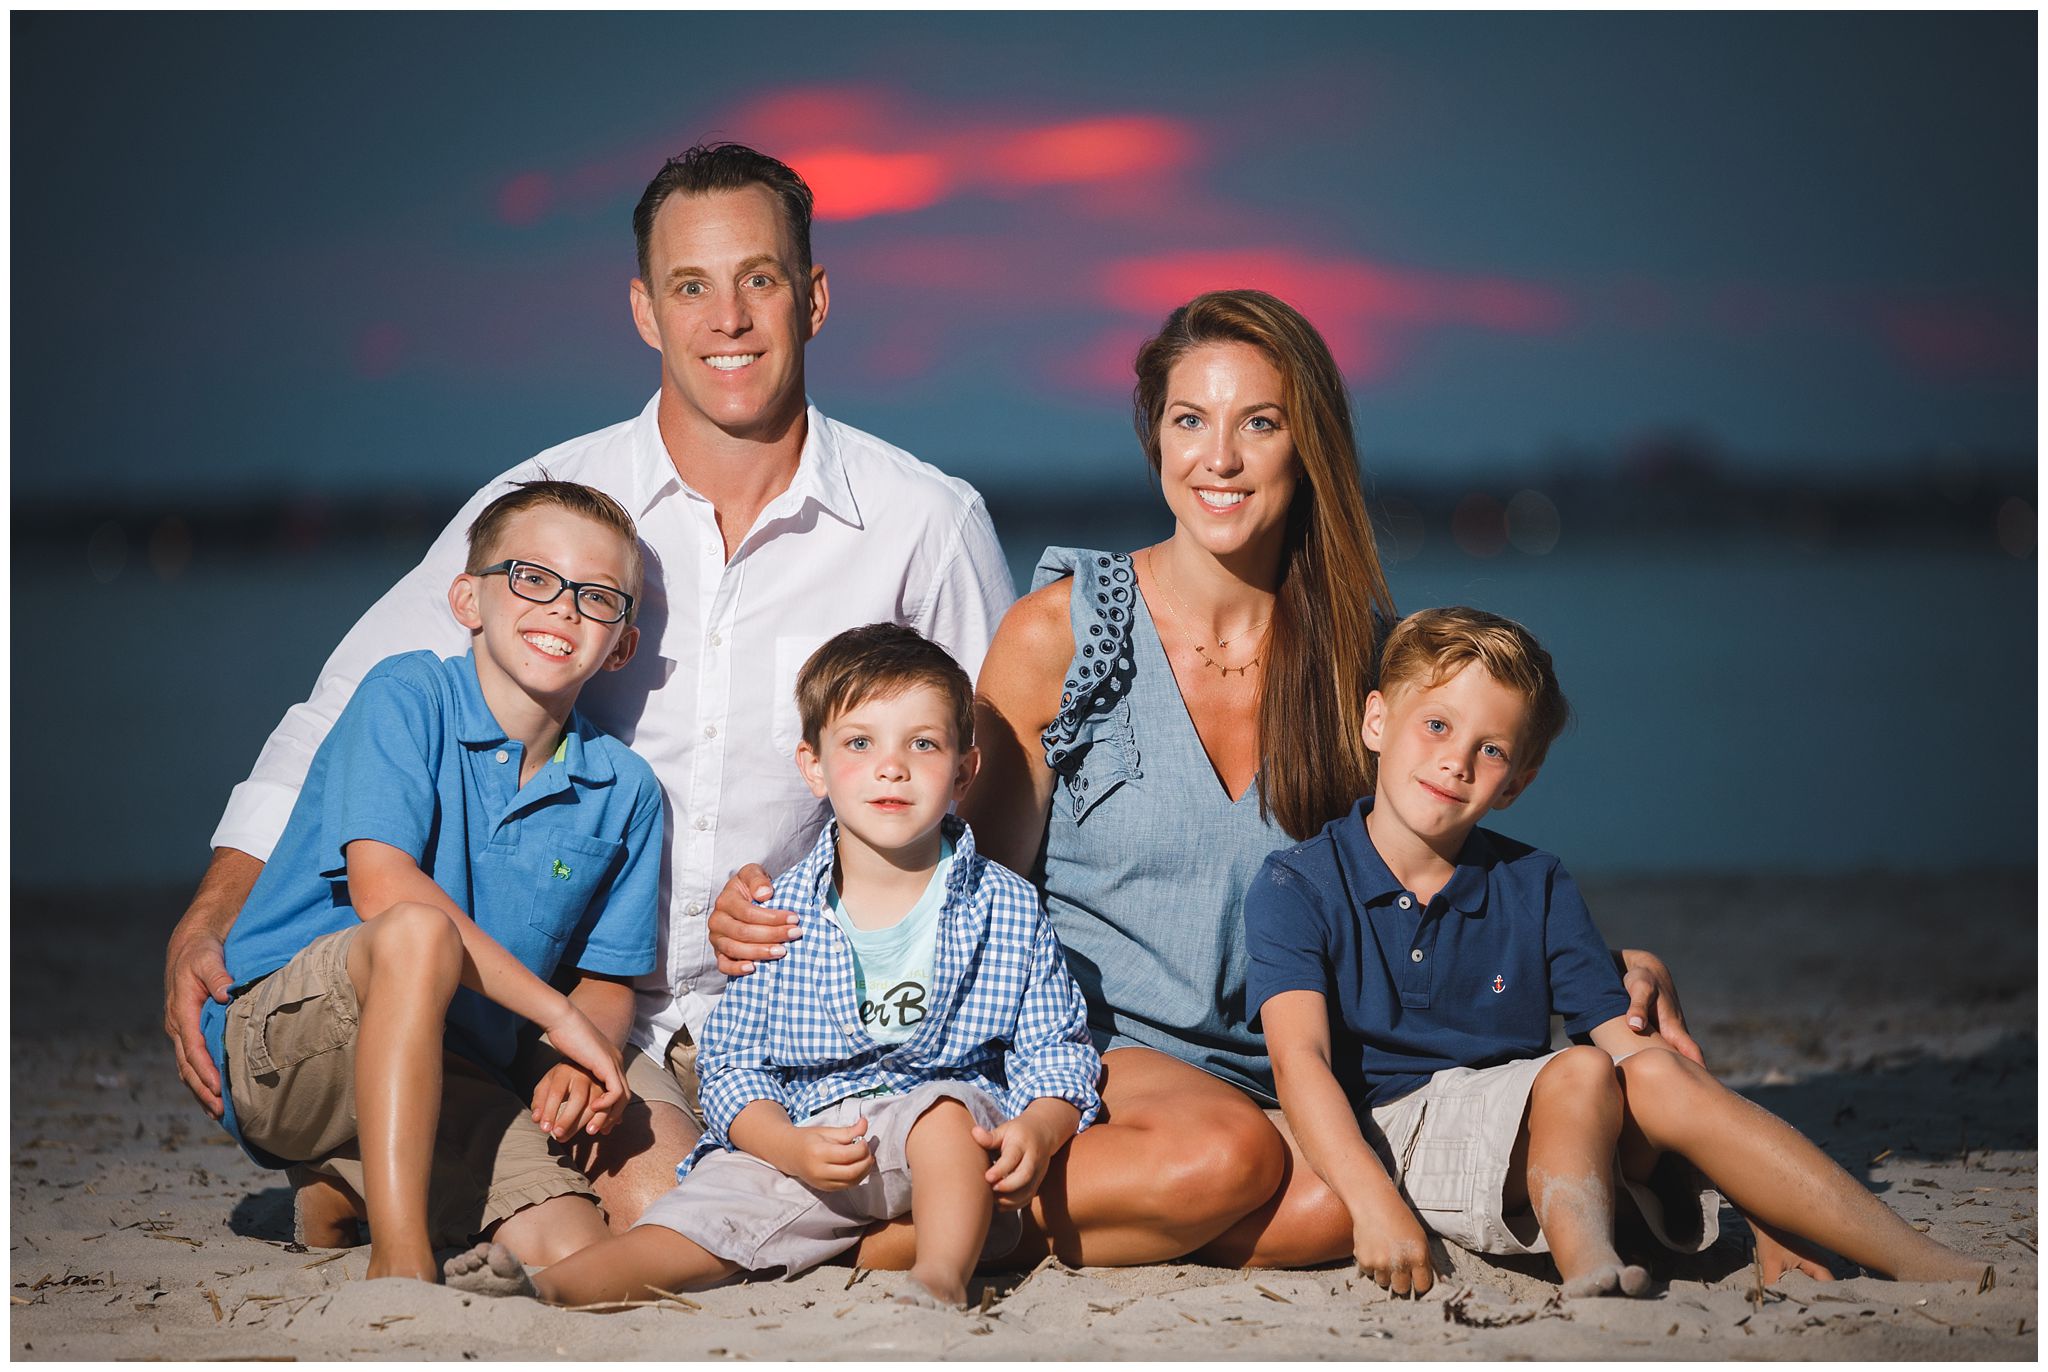 Family Portraits on The Beach | GEORGI ANASTASOV